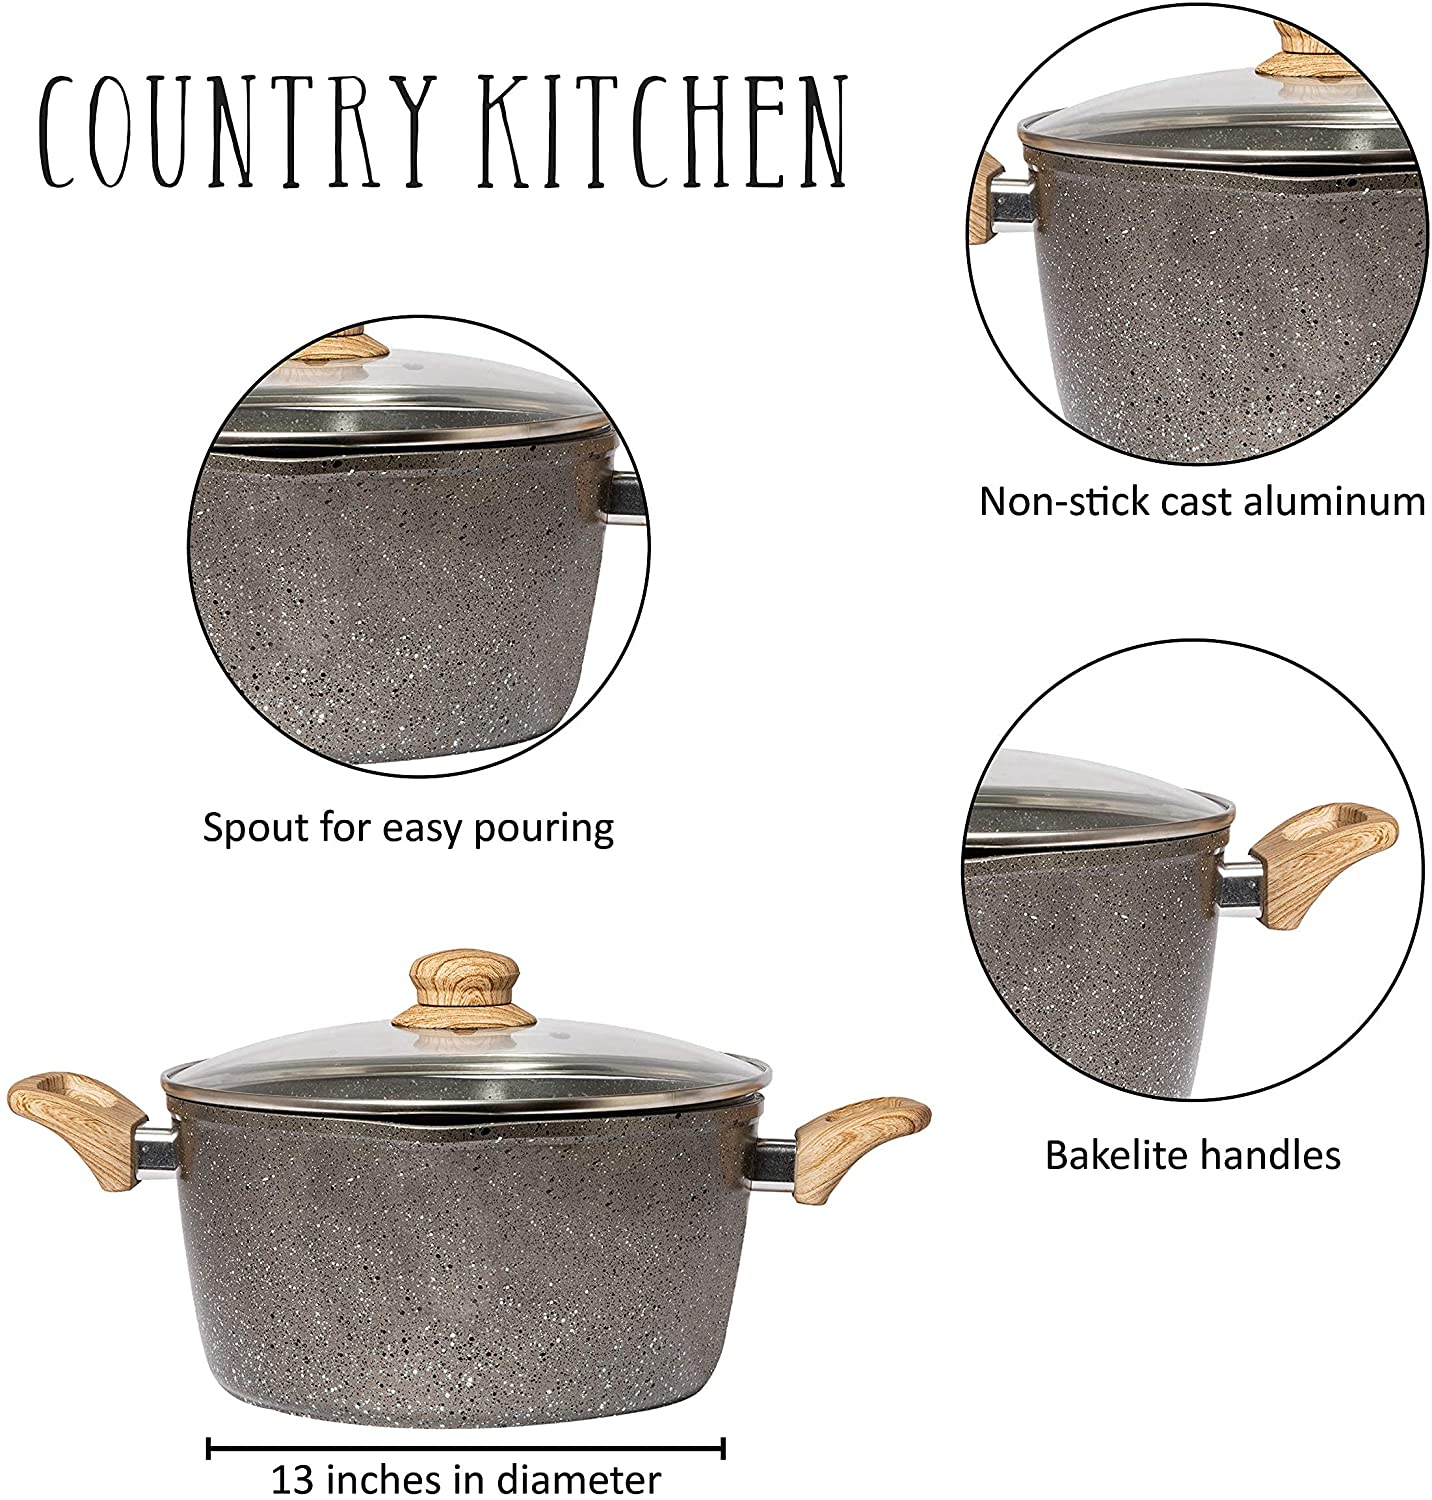 Country Kitchen Nonstick Frying Pans, 2 Piece Nonstick Cast